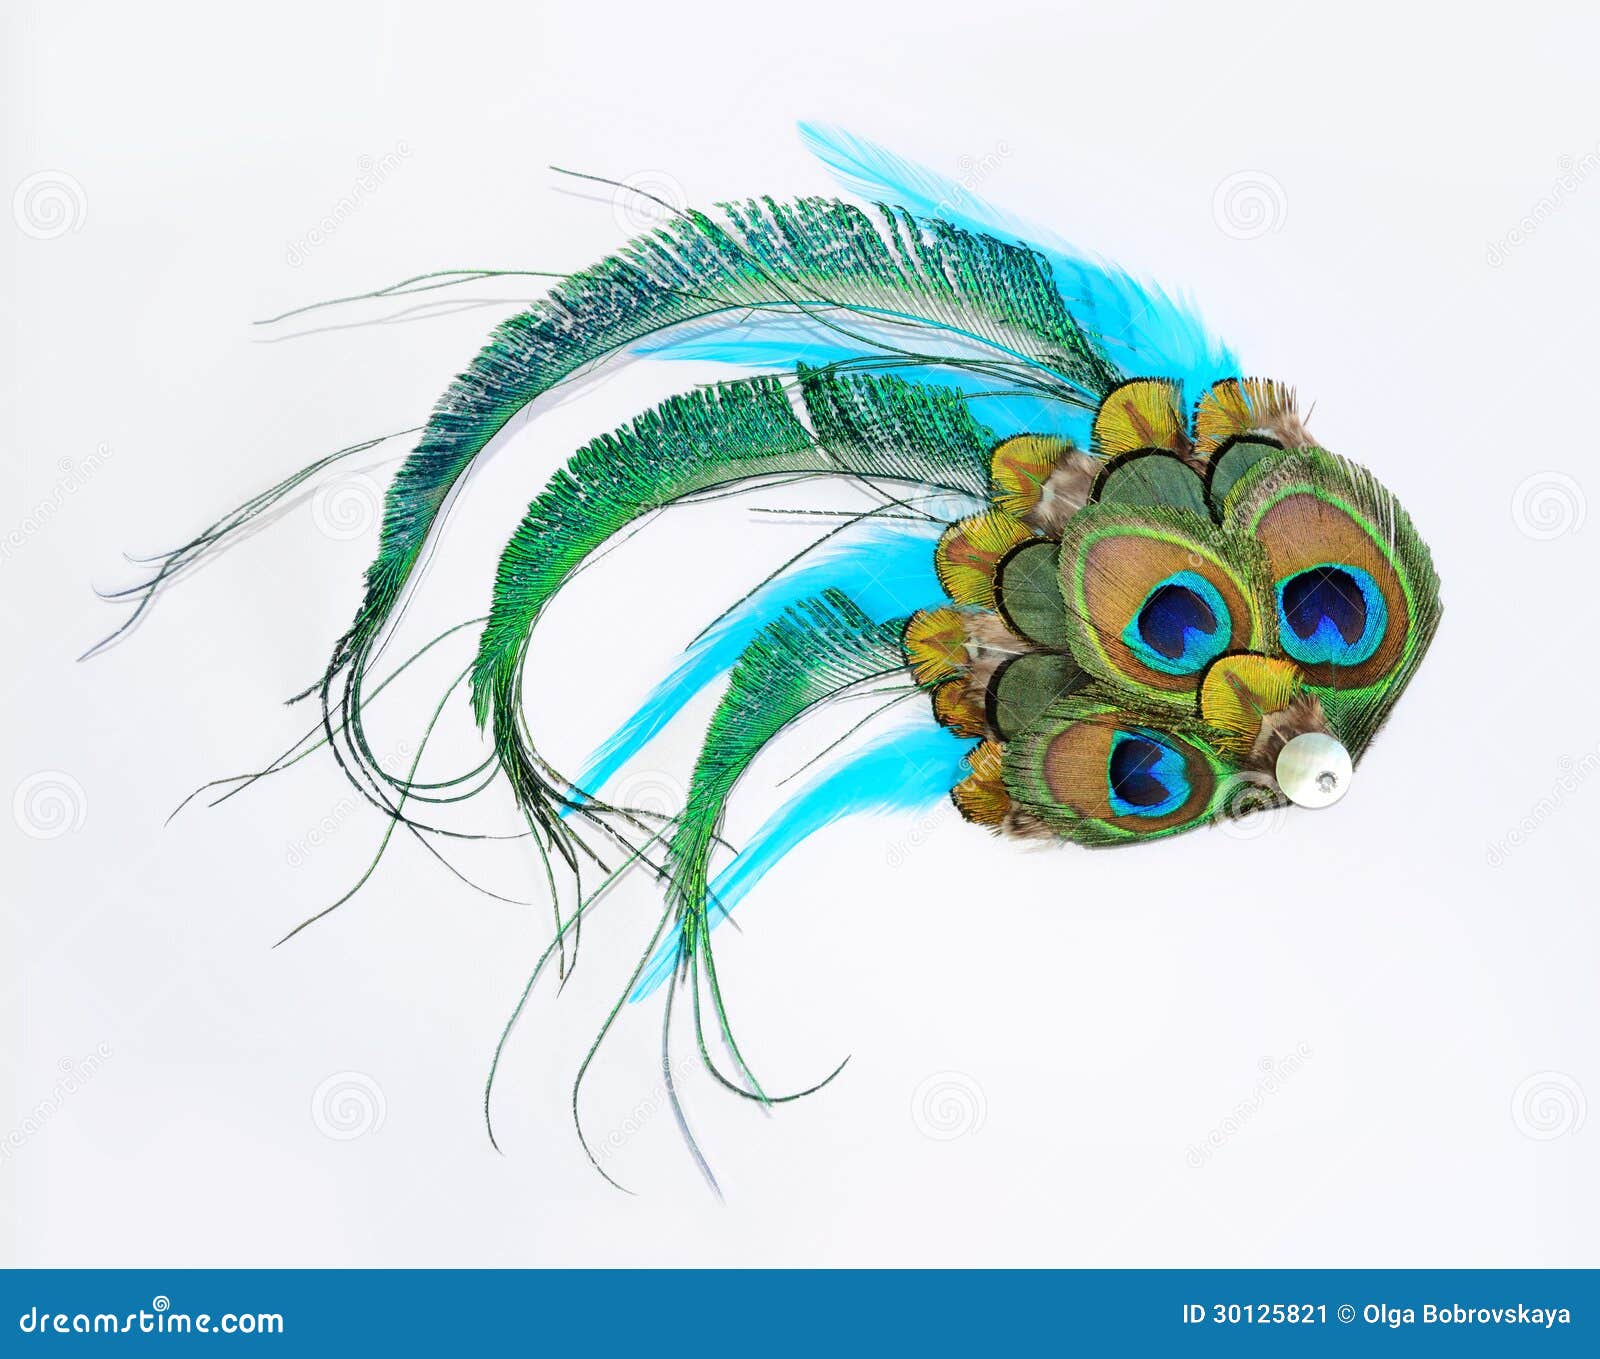 peacock hair accessory